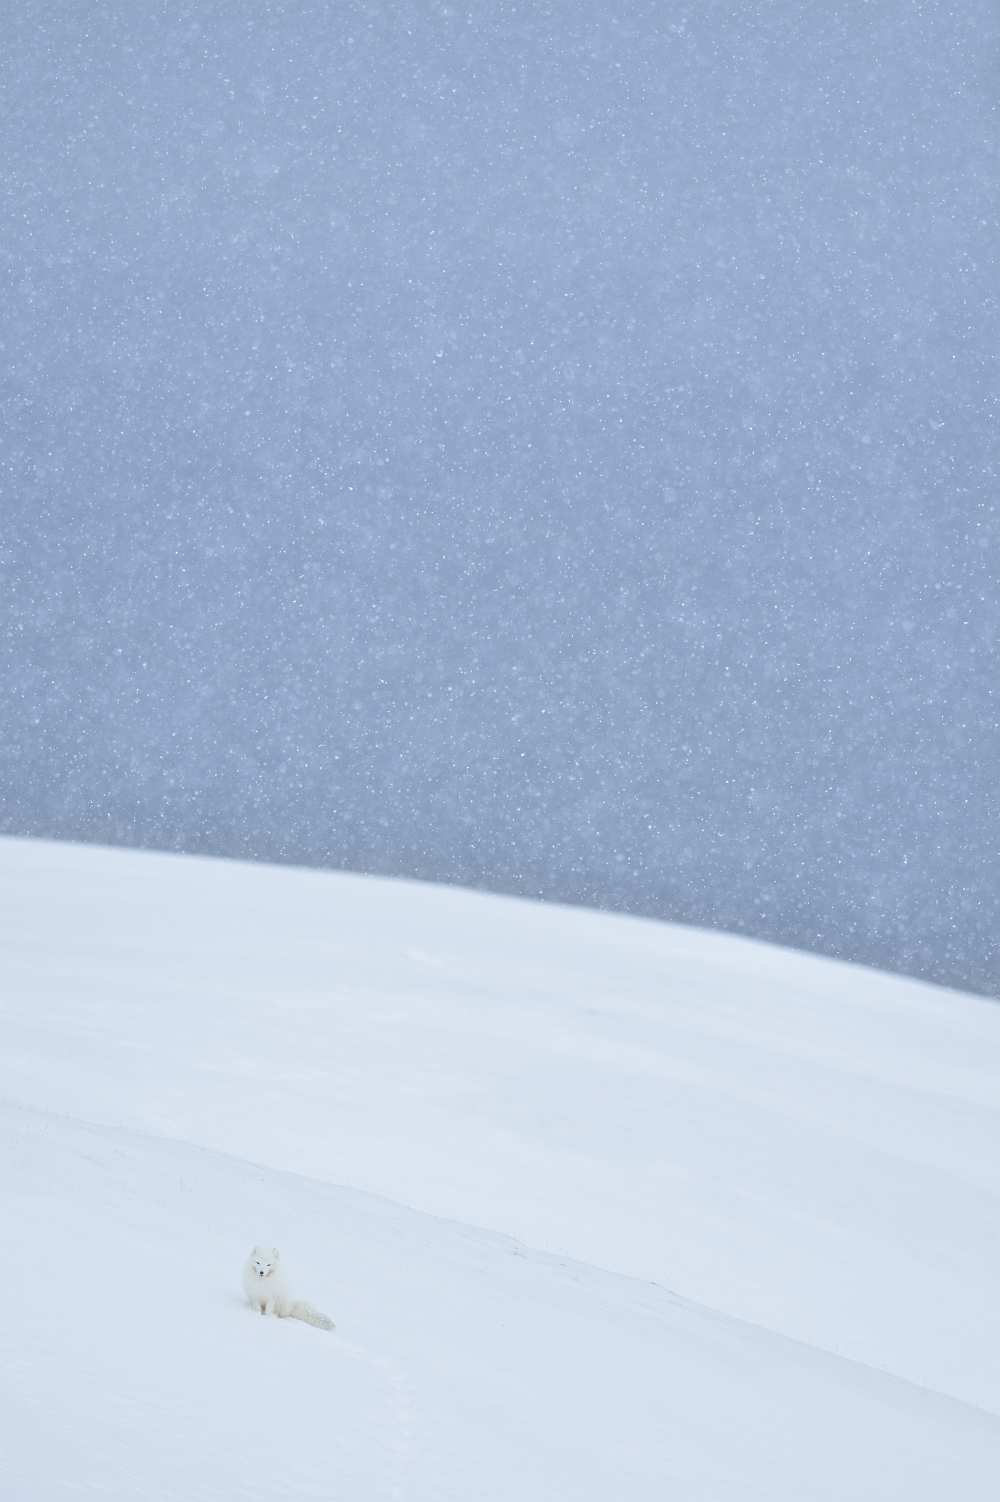 Snowy arctic fox in Svalbard from Yves Adams